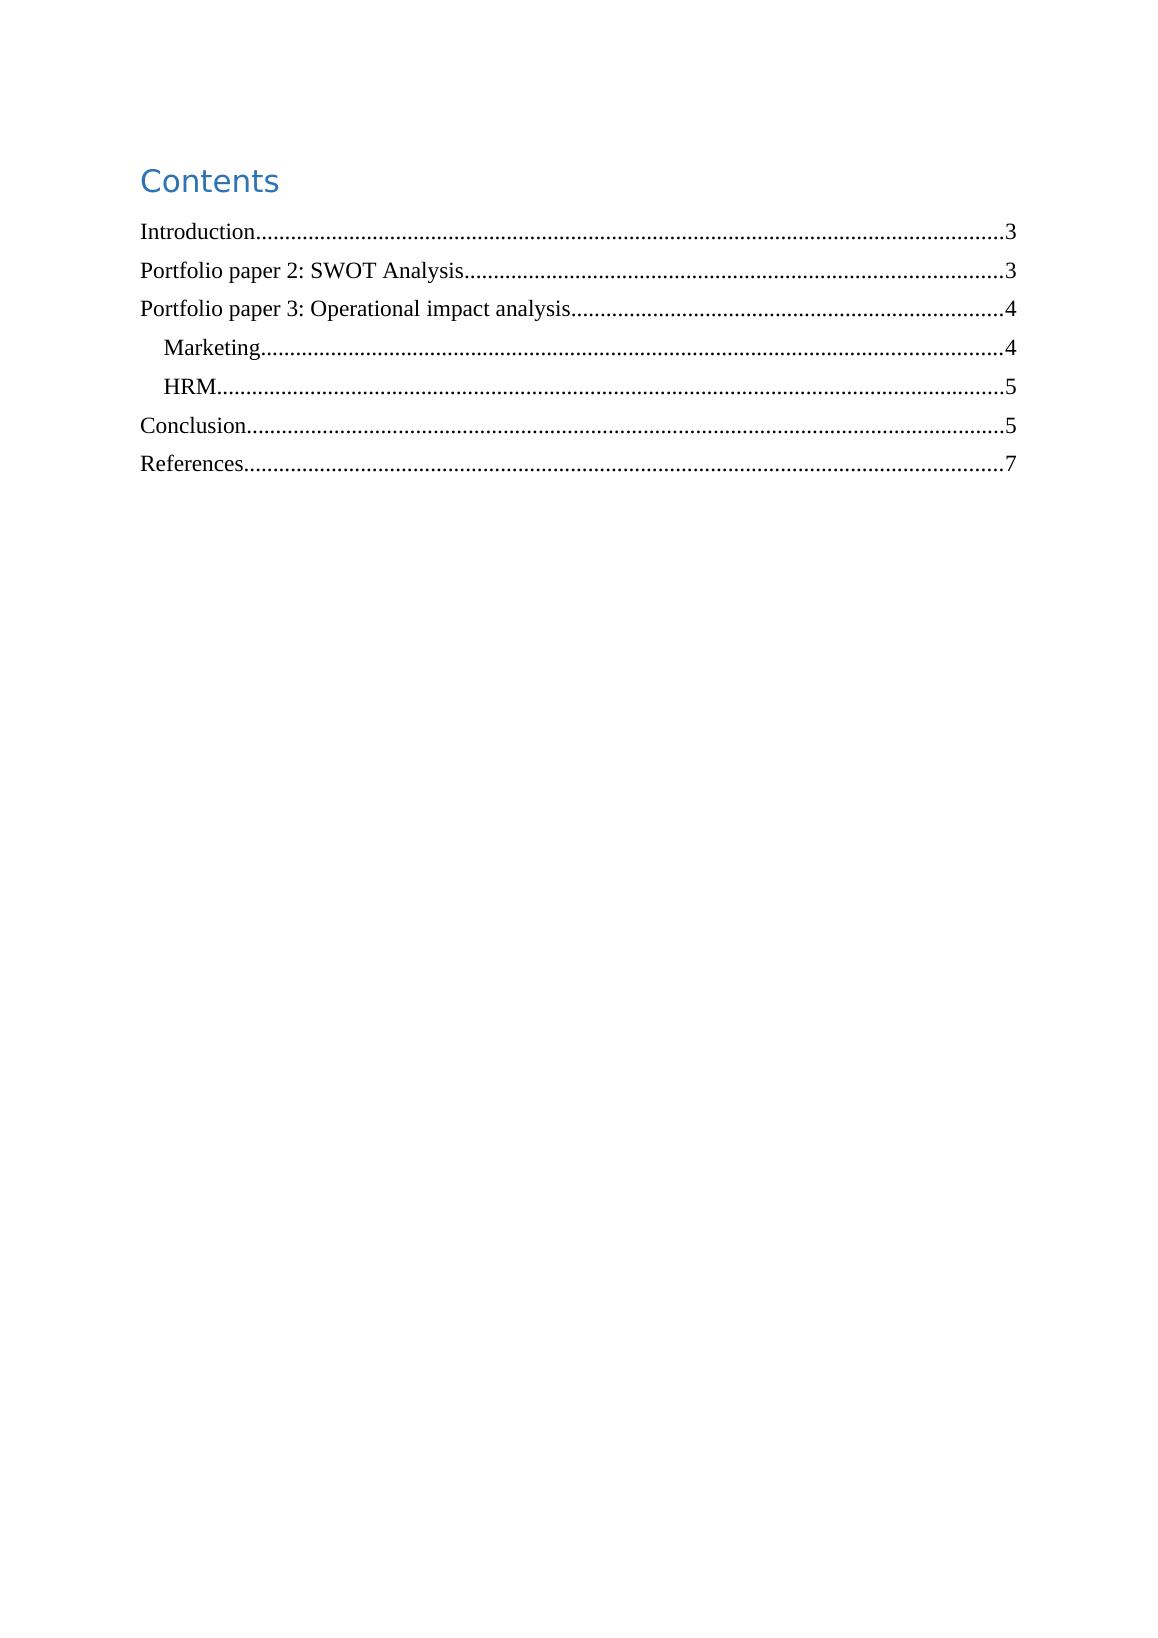 Portfolio Papers 2&3: SWOT Analysis and Operational Impact Analysis_2